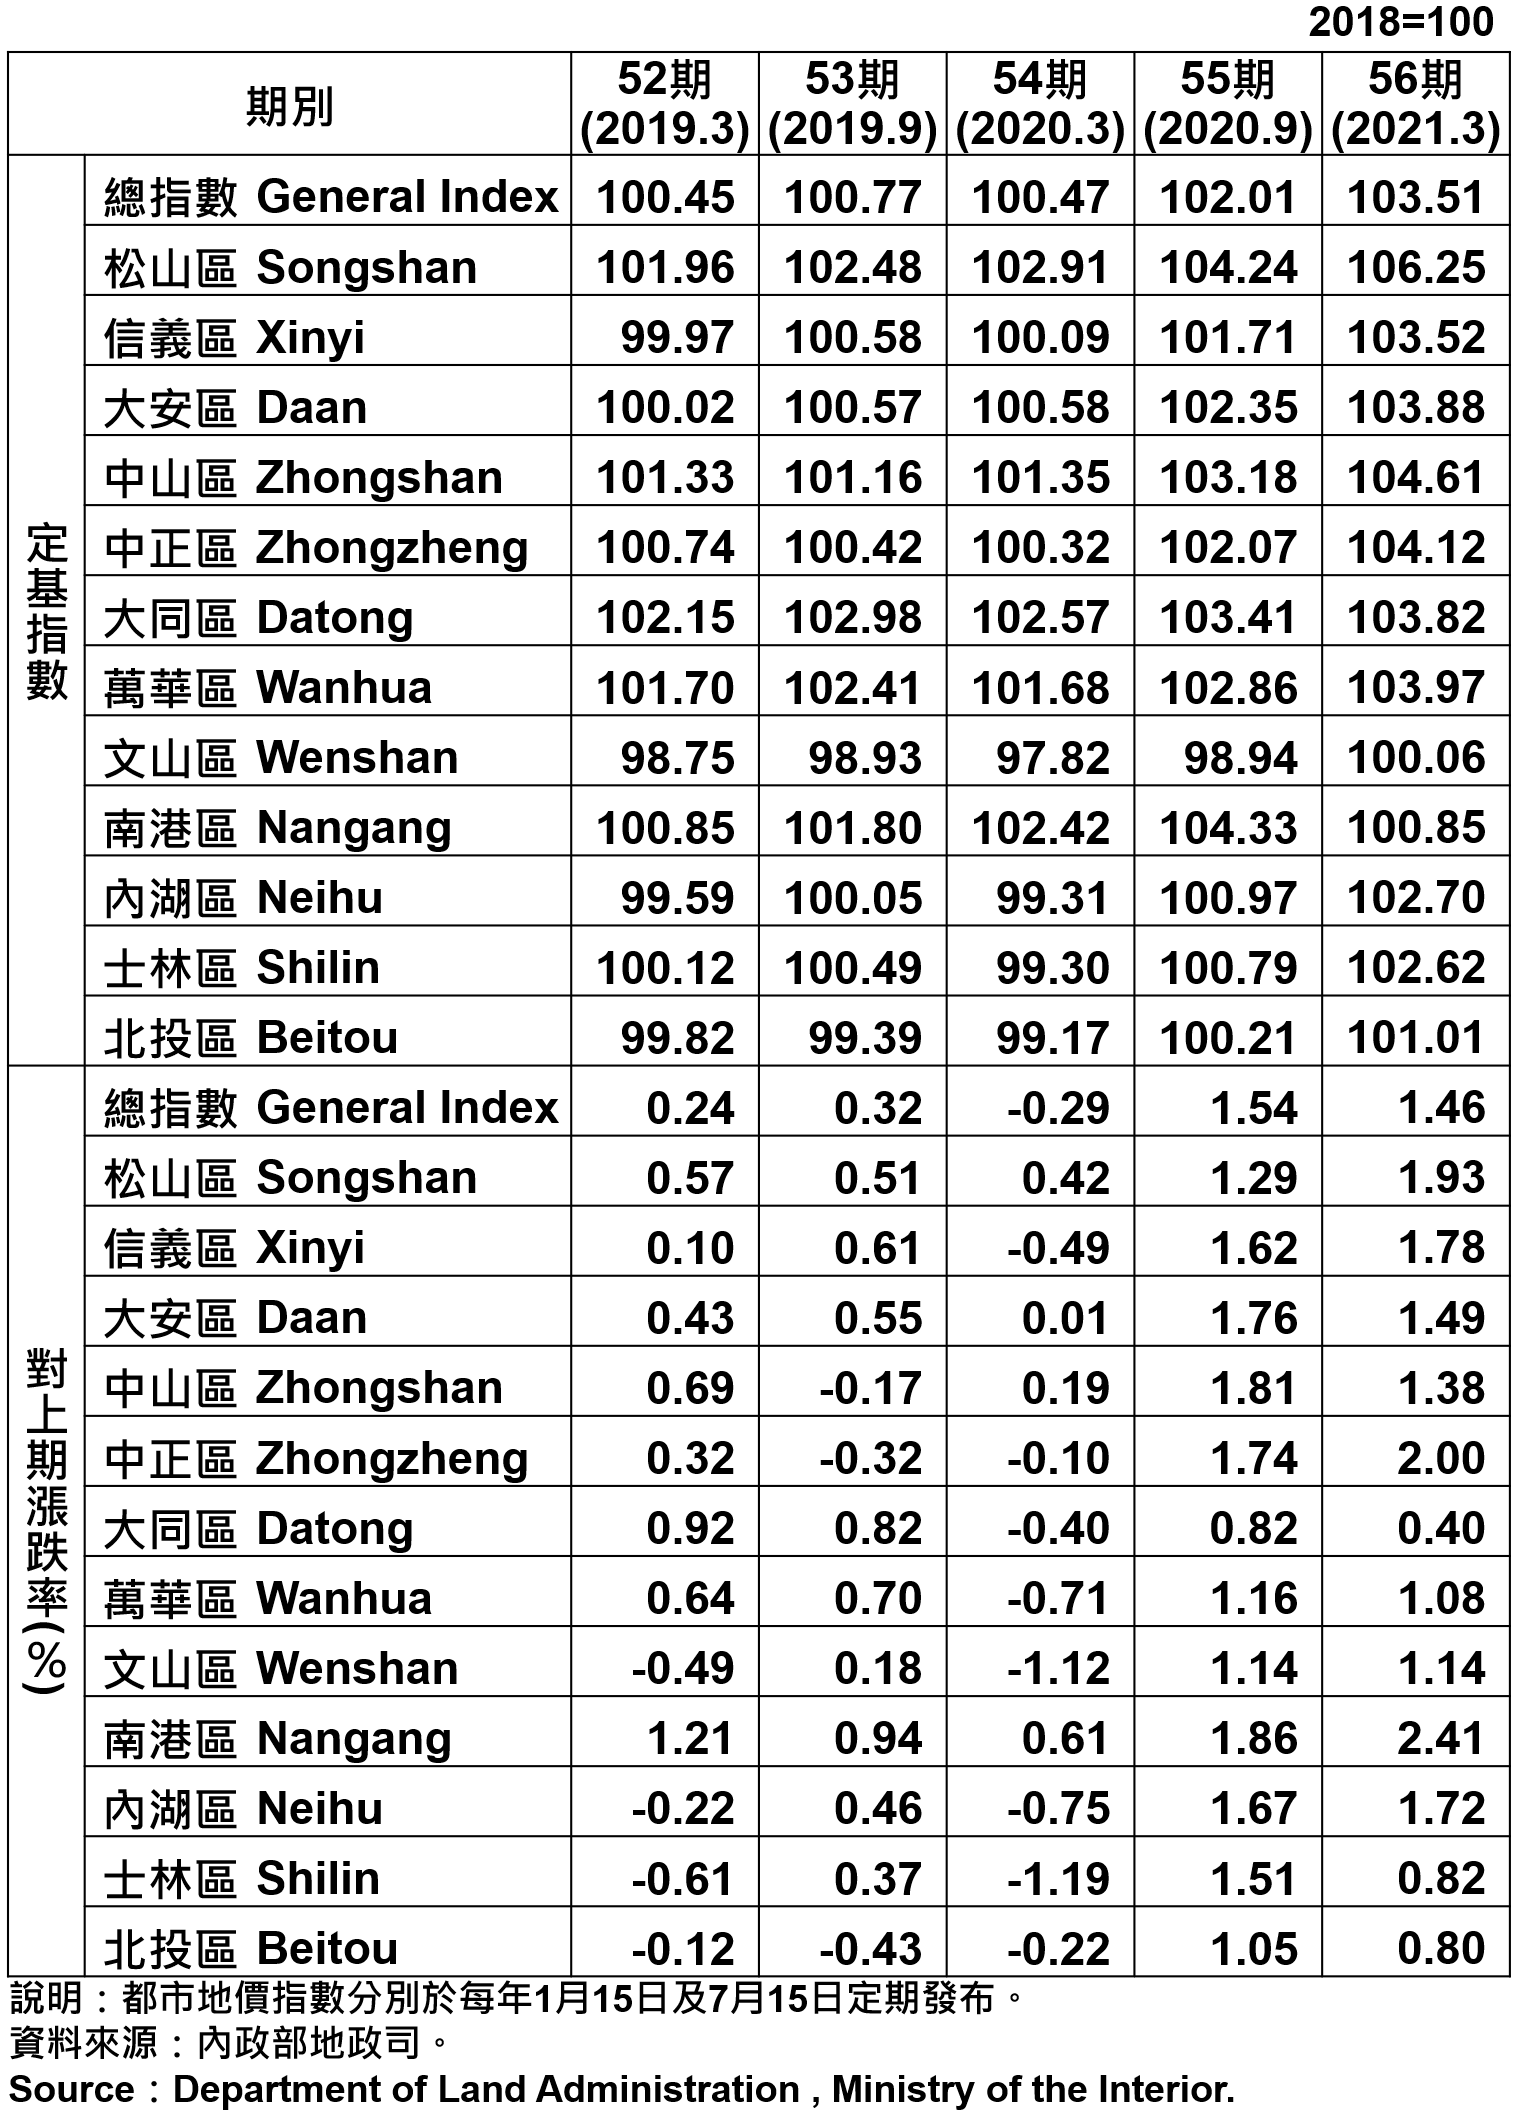 臺北市都市地價指數分區表—56期 Taipei's Urban Land Price Indexes by Districts—56th